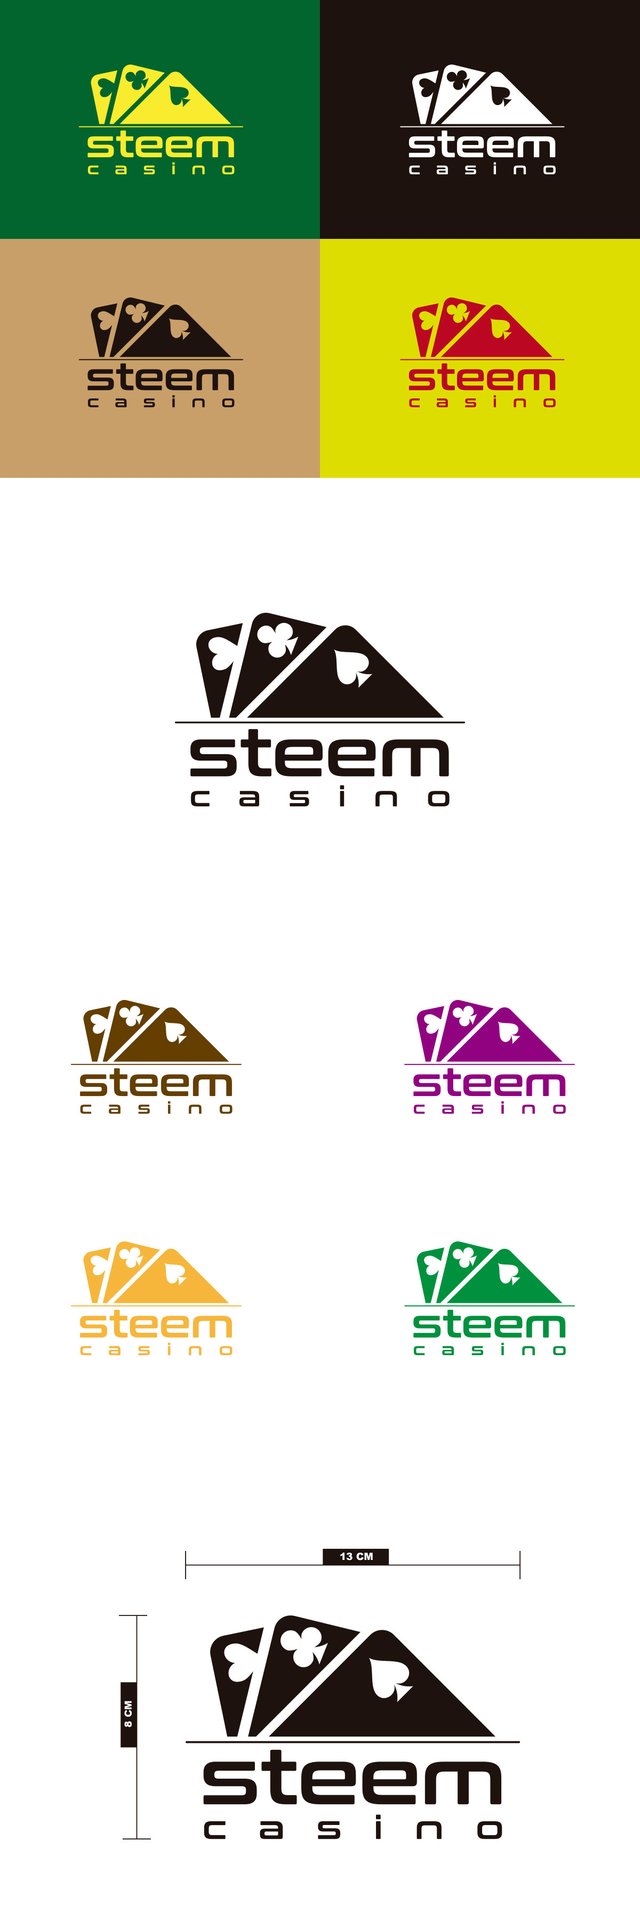 Steem-casino-2.jpg